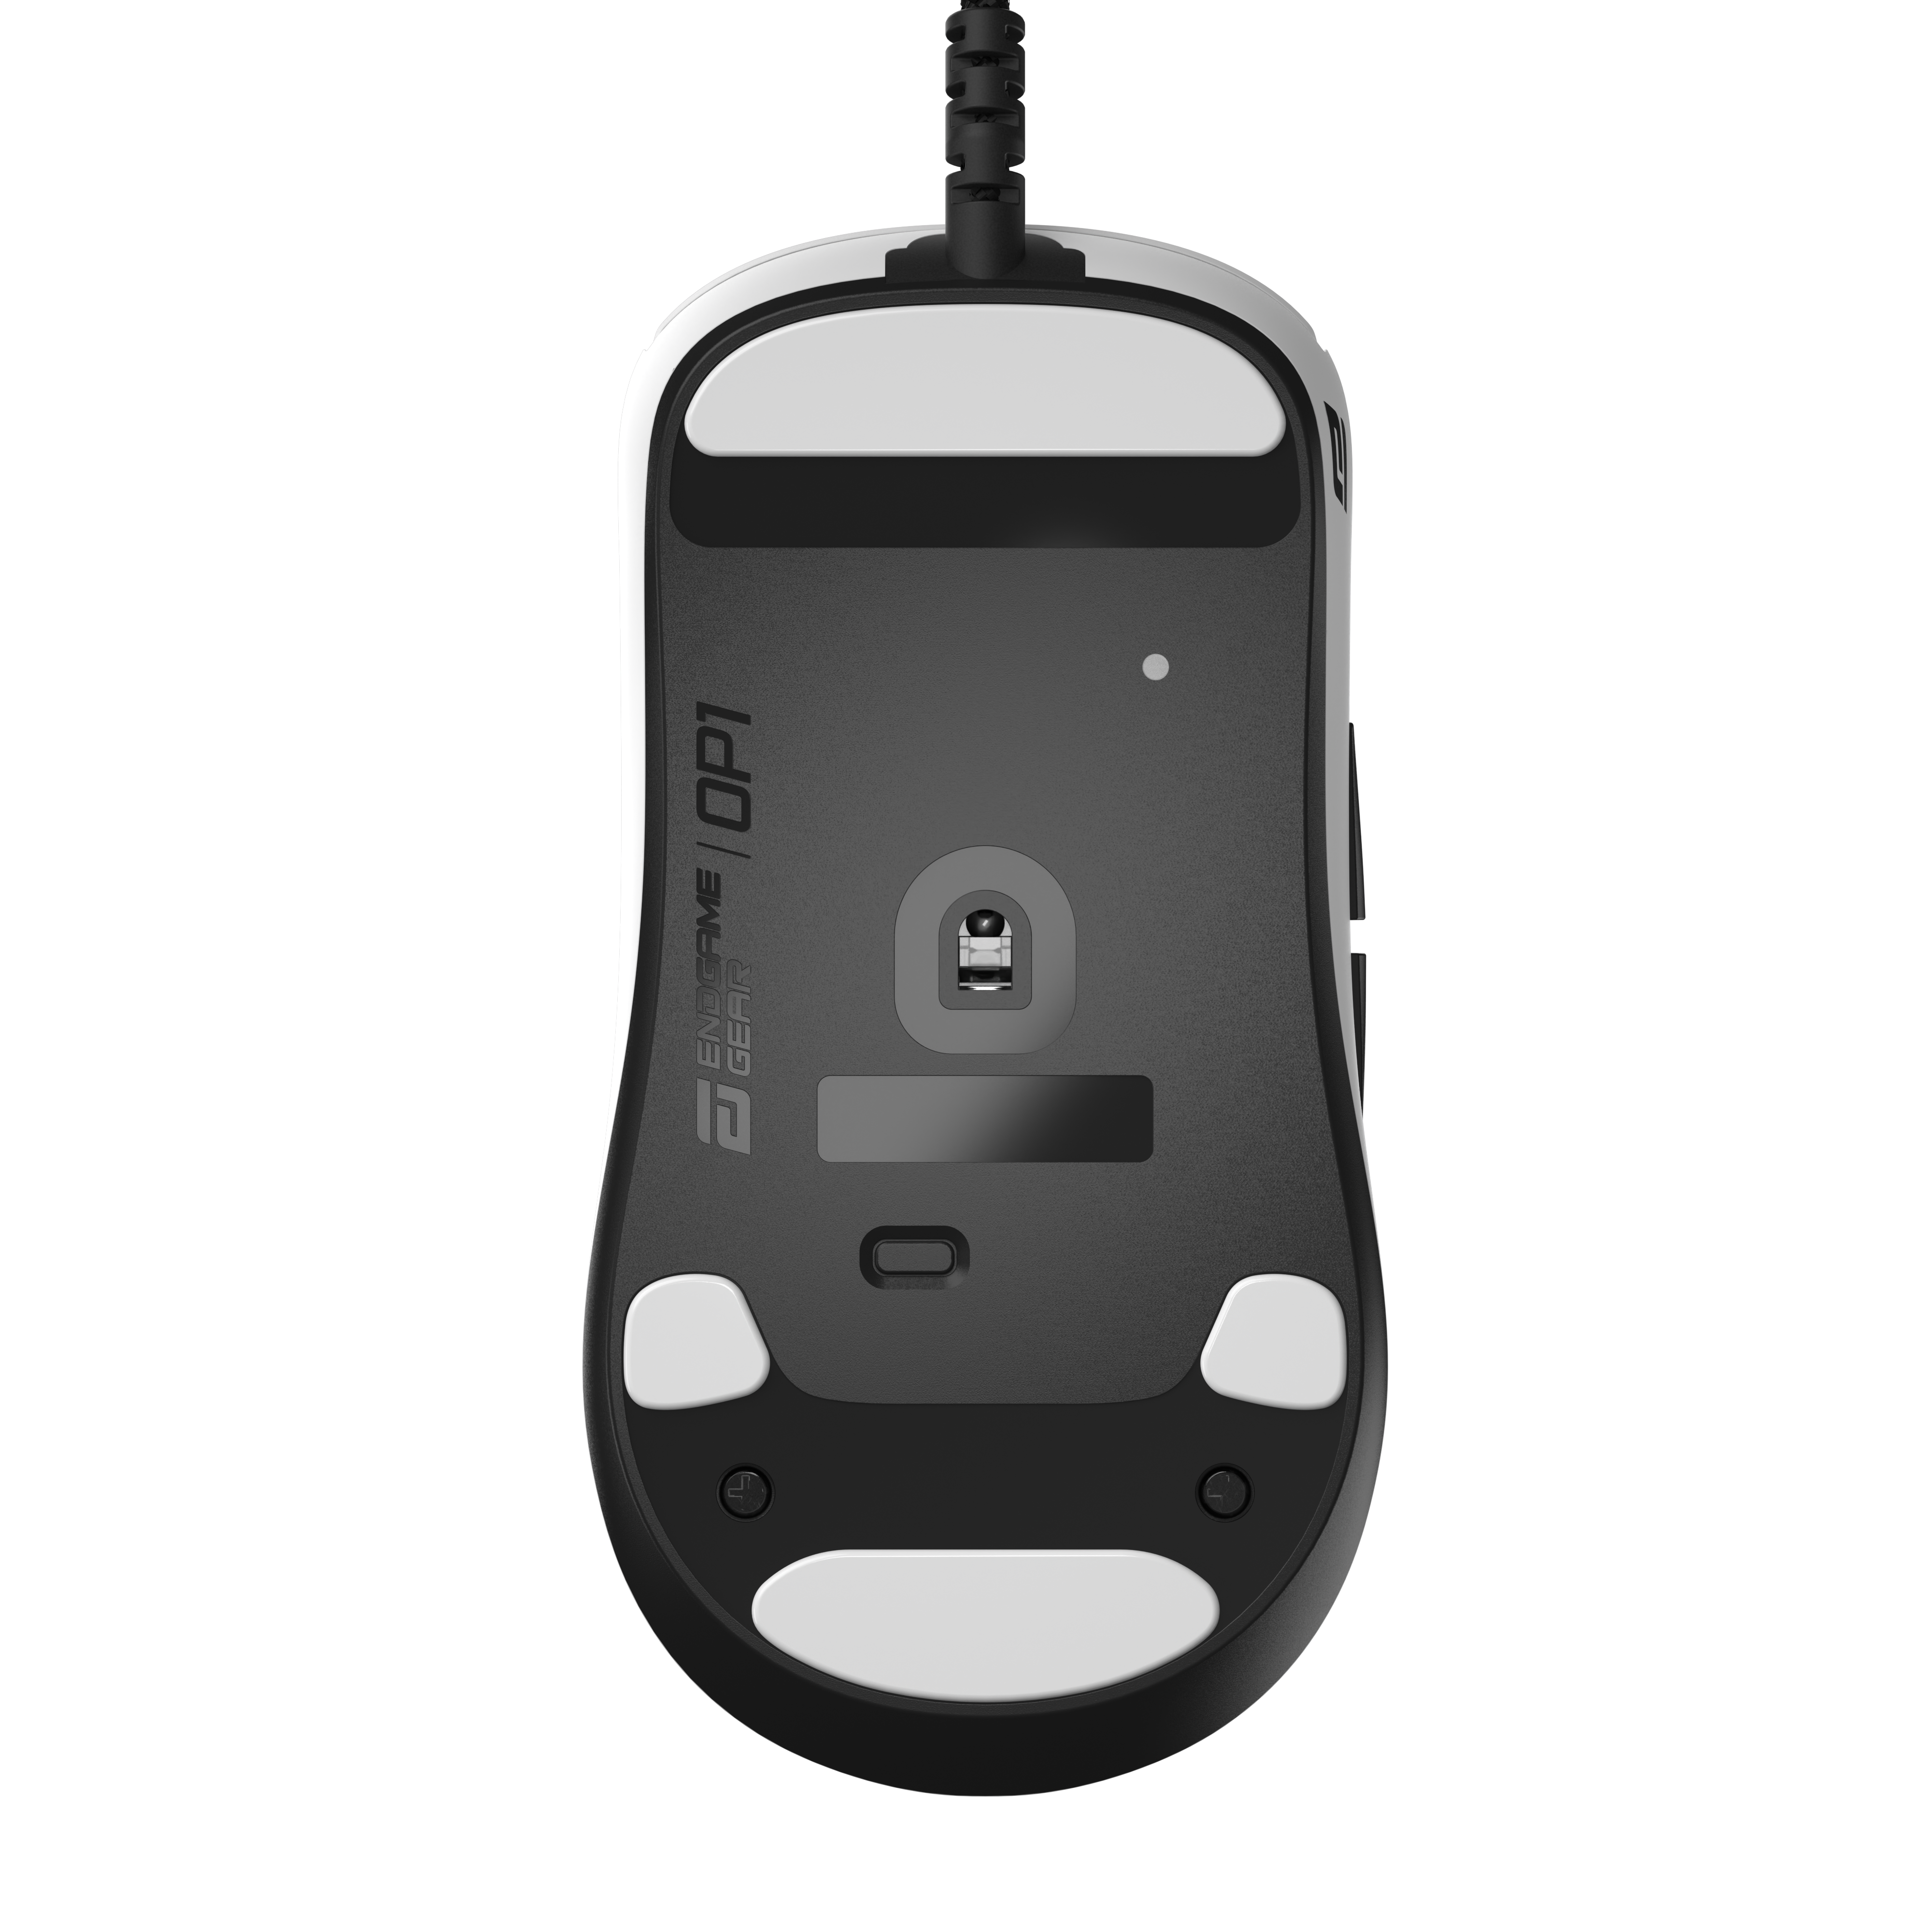 Endgame Gear OP1 8k USB Optical Gaming Mouse - White | OcUK